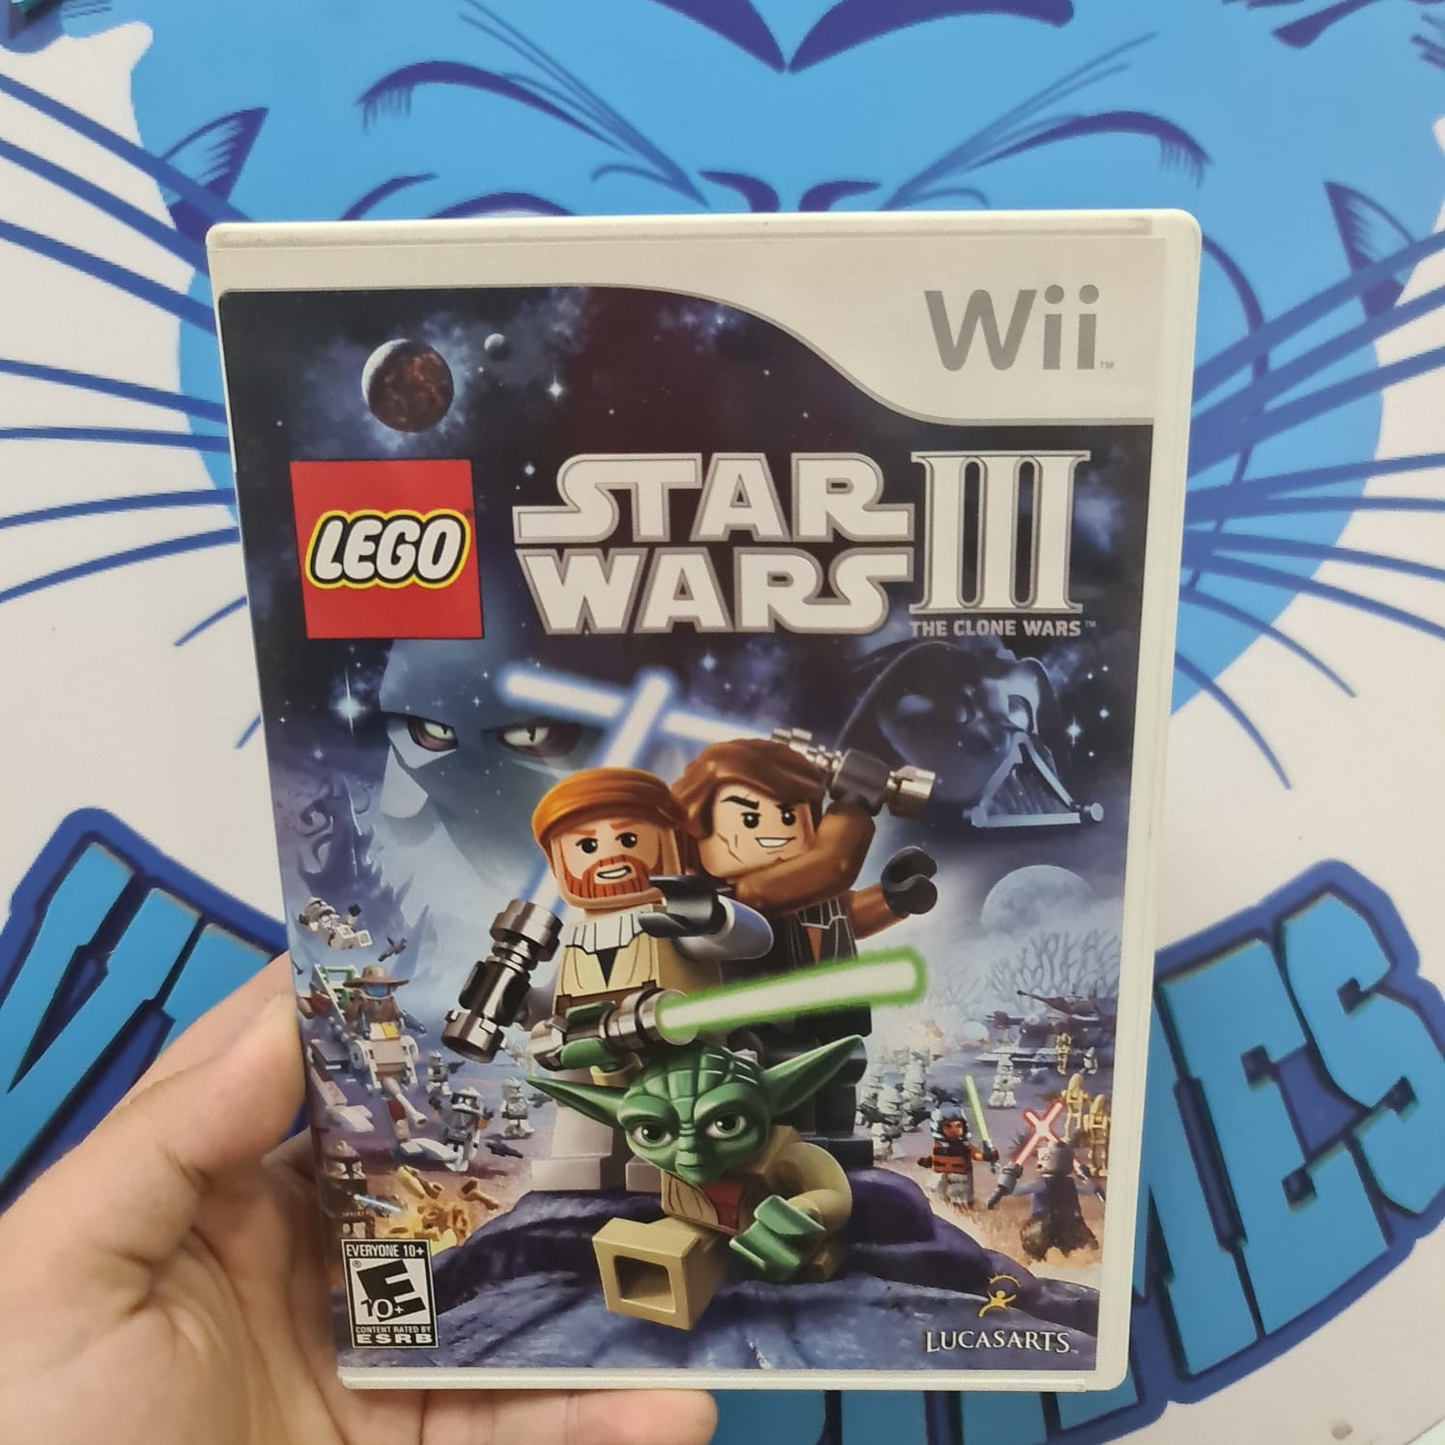 Lego star wars 3 - Nintendo wii